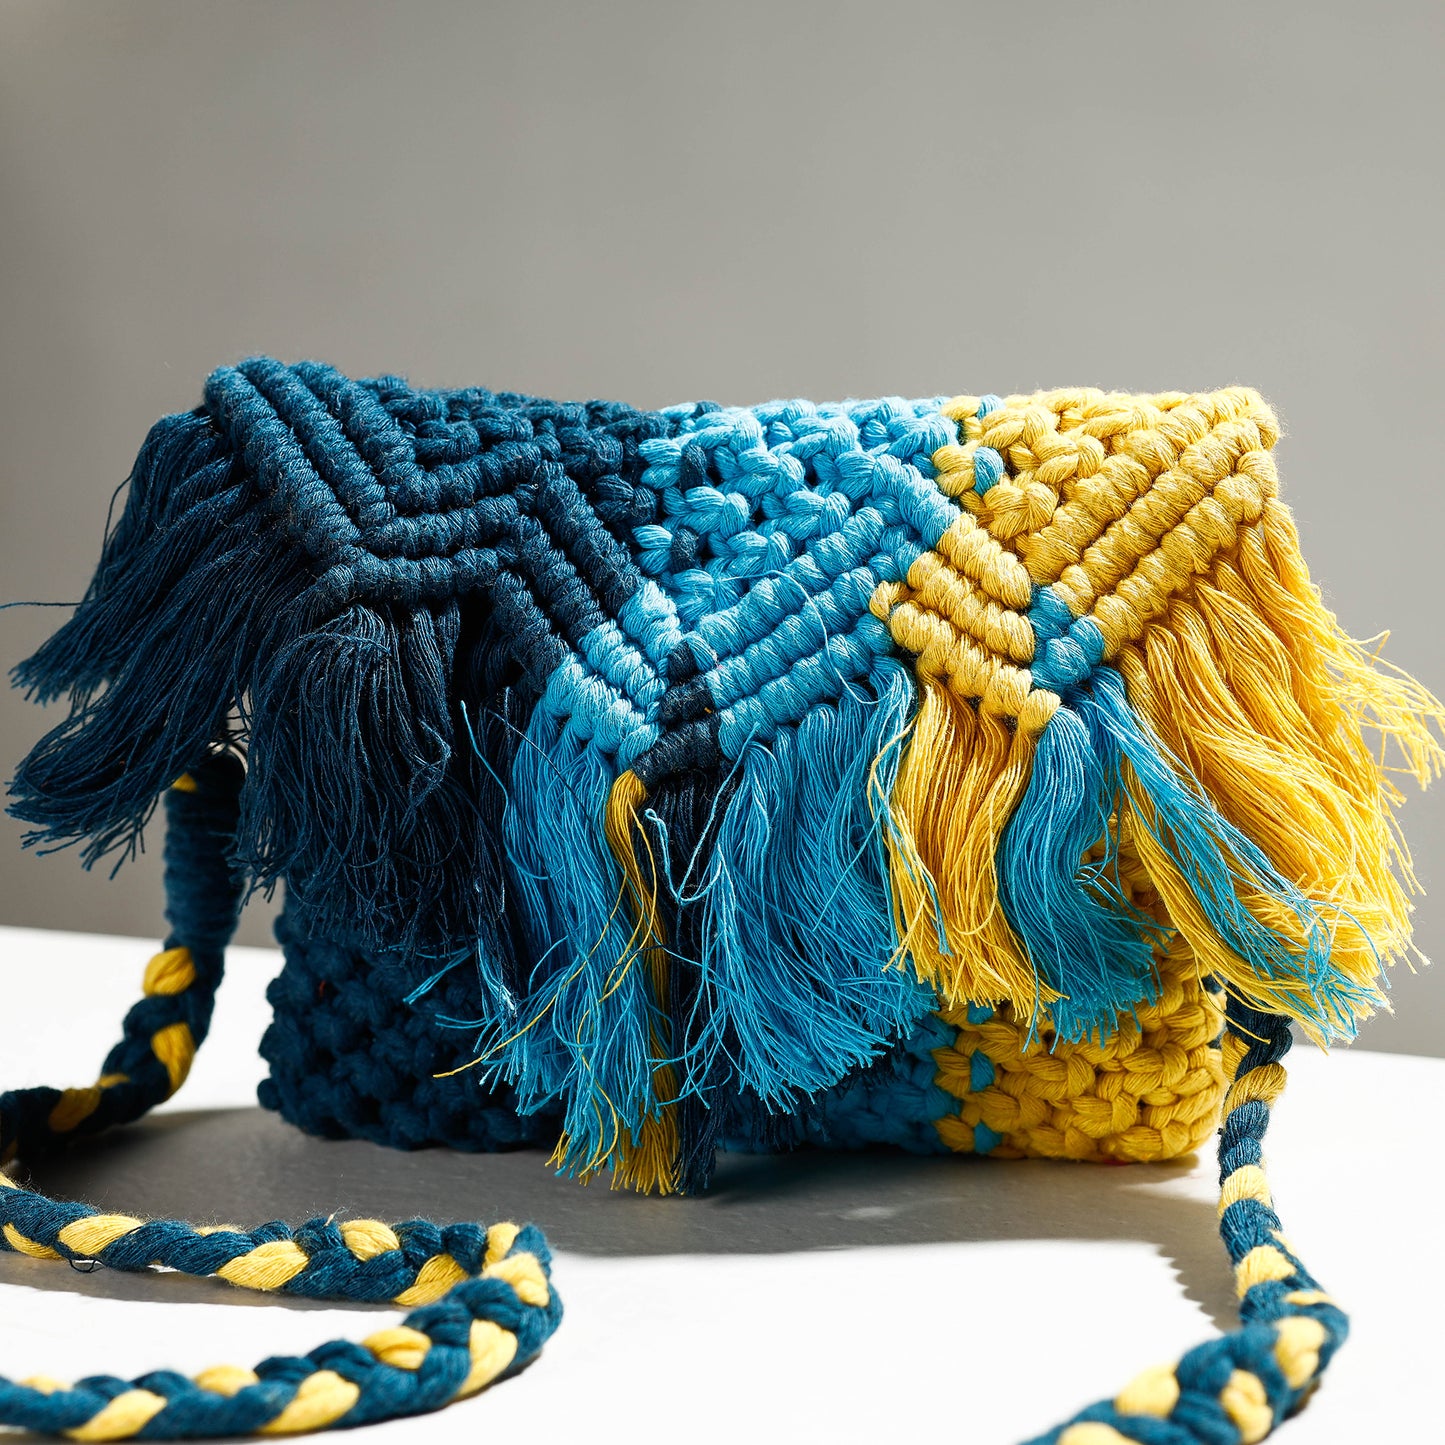 Multicolor - Multicolour Thread Work Handcrafted Macrame Sling Bag